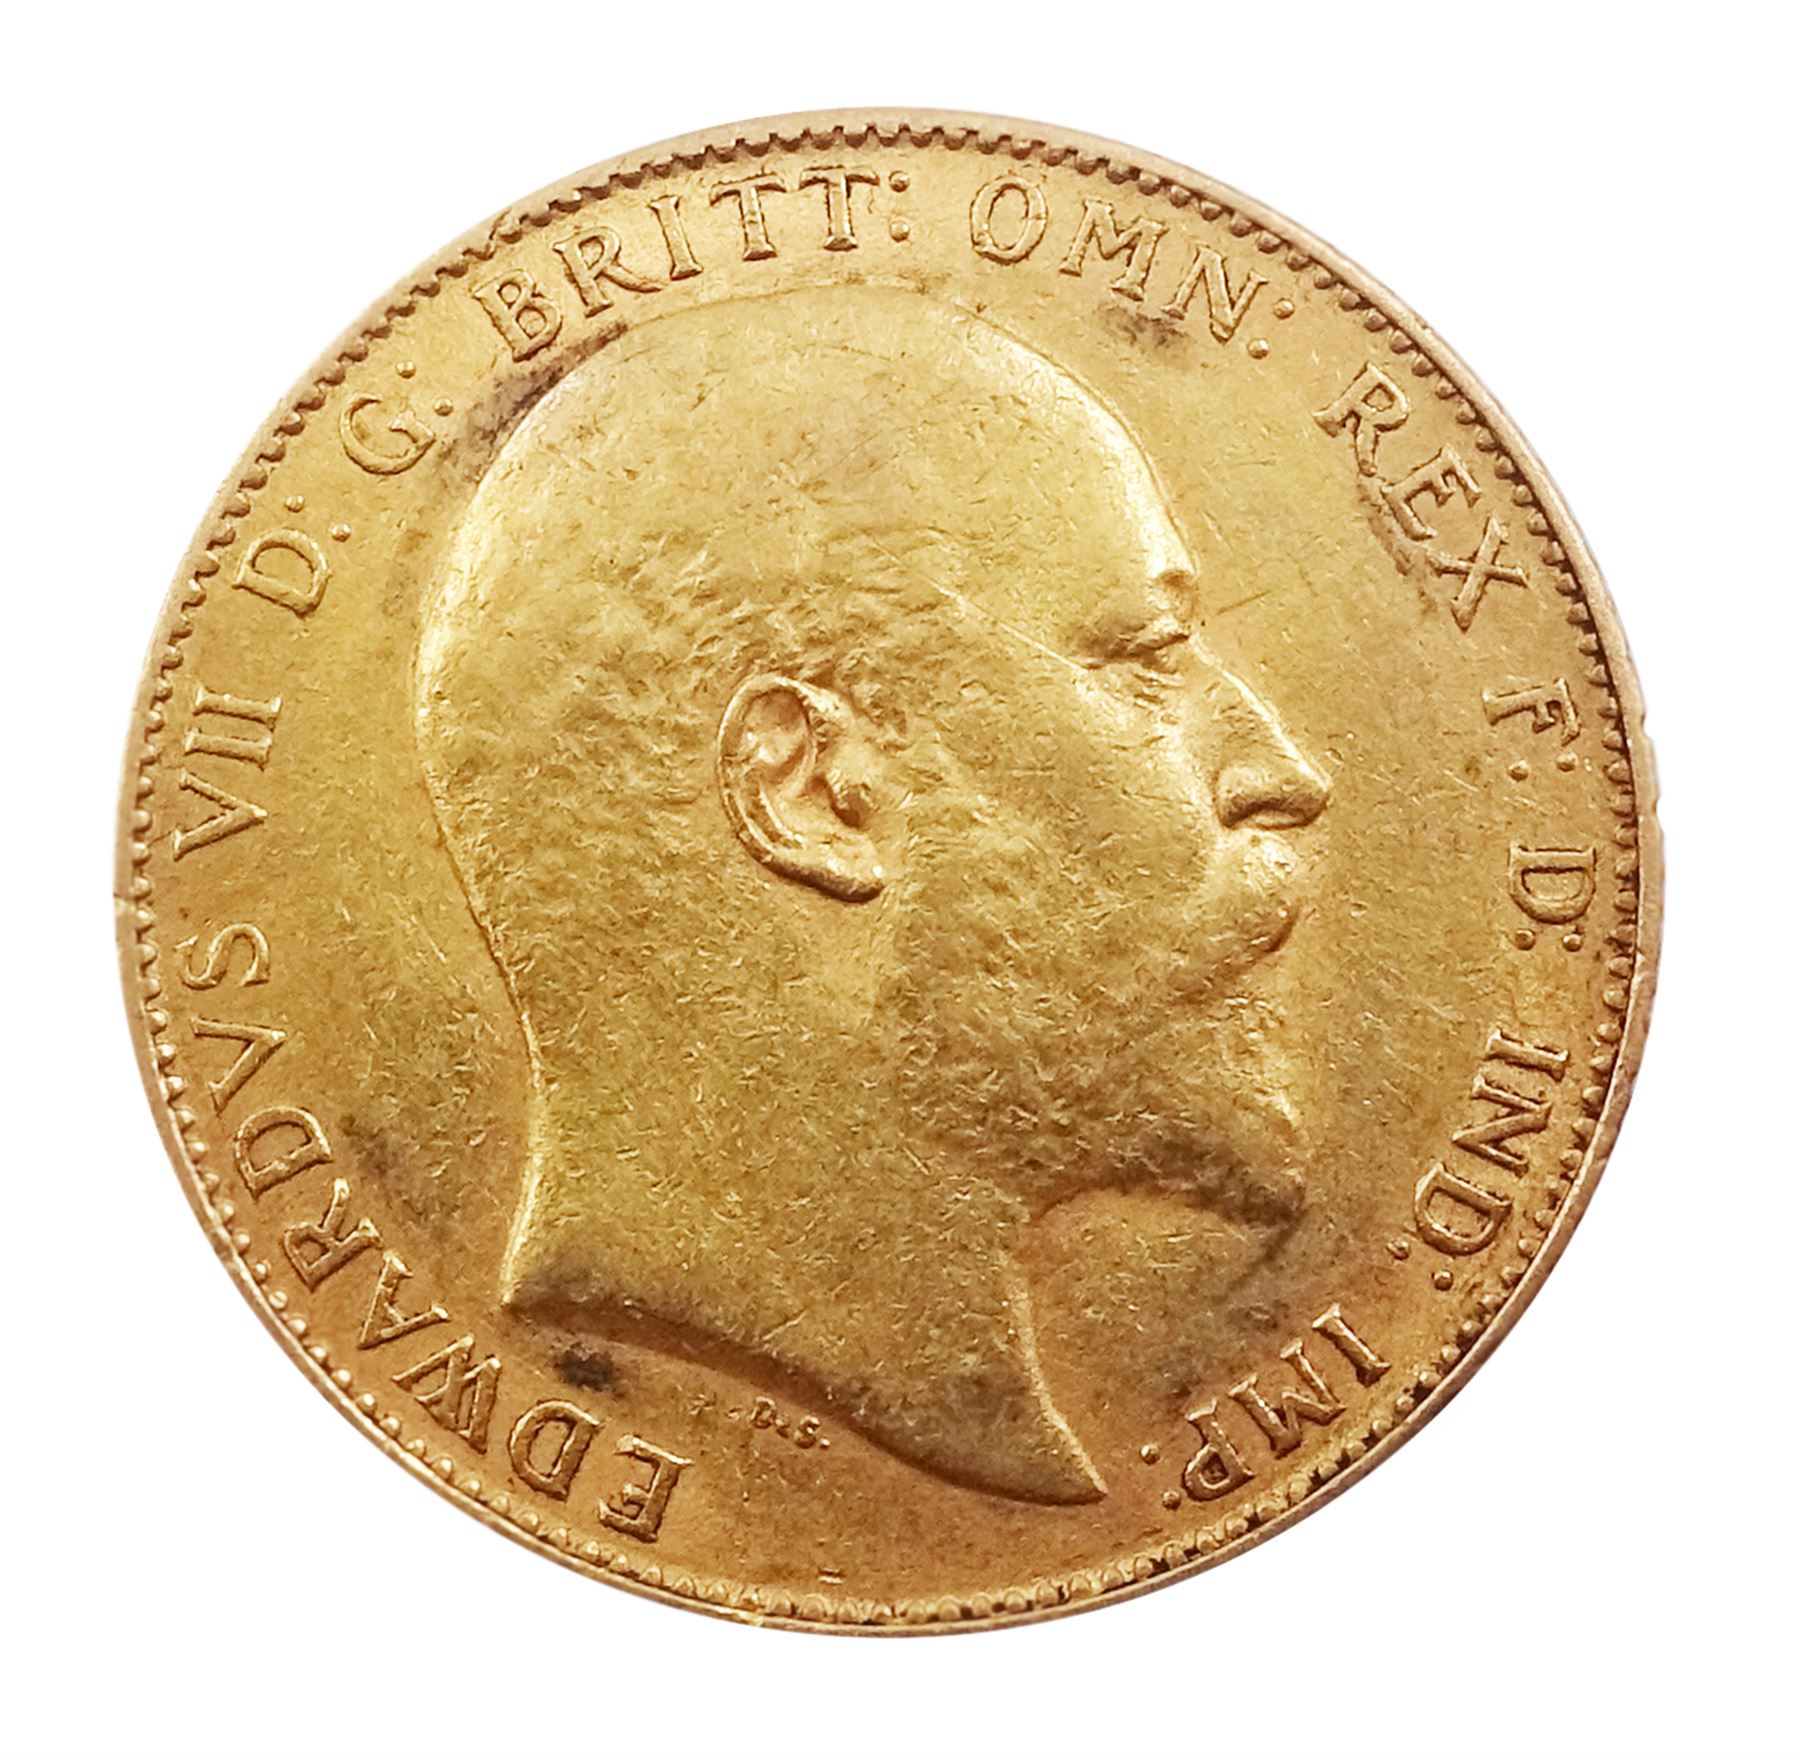 King Edward VII 1906 gold full sovereign coin